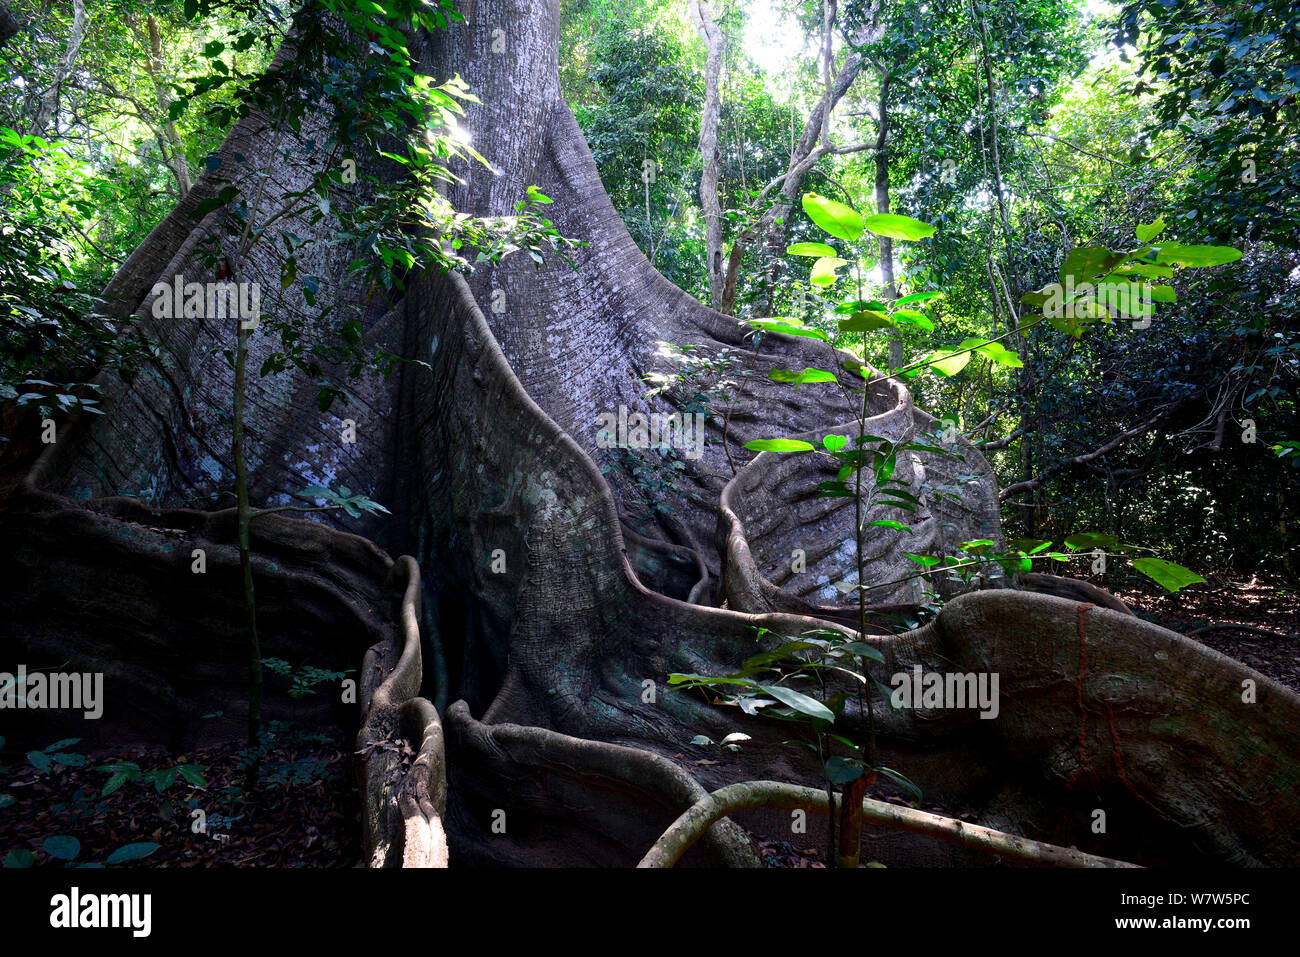 Grande kapok (Ceiba pentandra) tree, del tronco e radici, Cantanhez National Park, la Guinea Bissau. Foto Stock